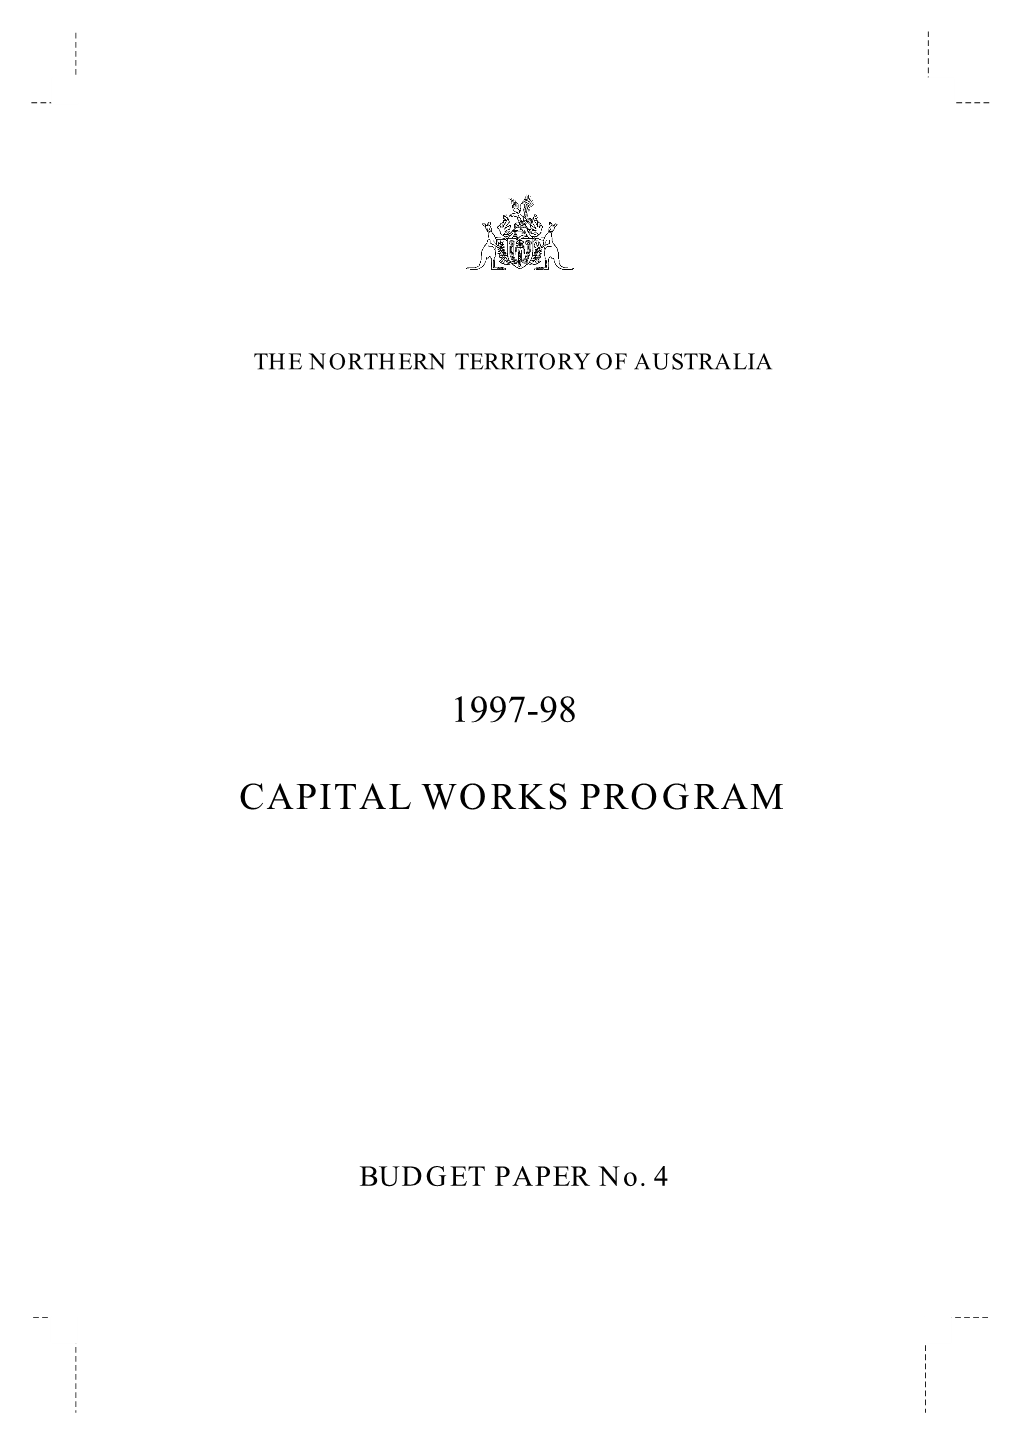 Capital Works Program